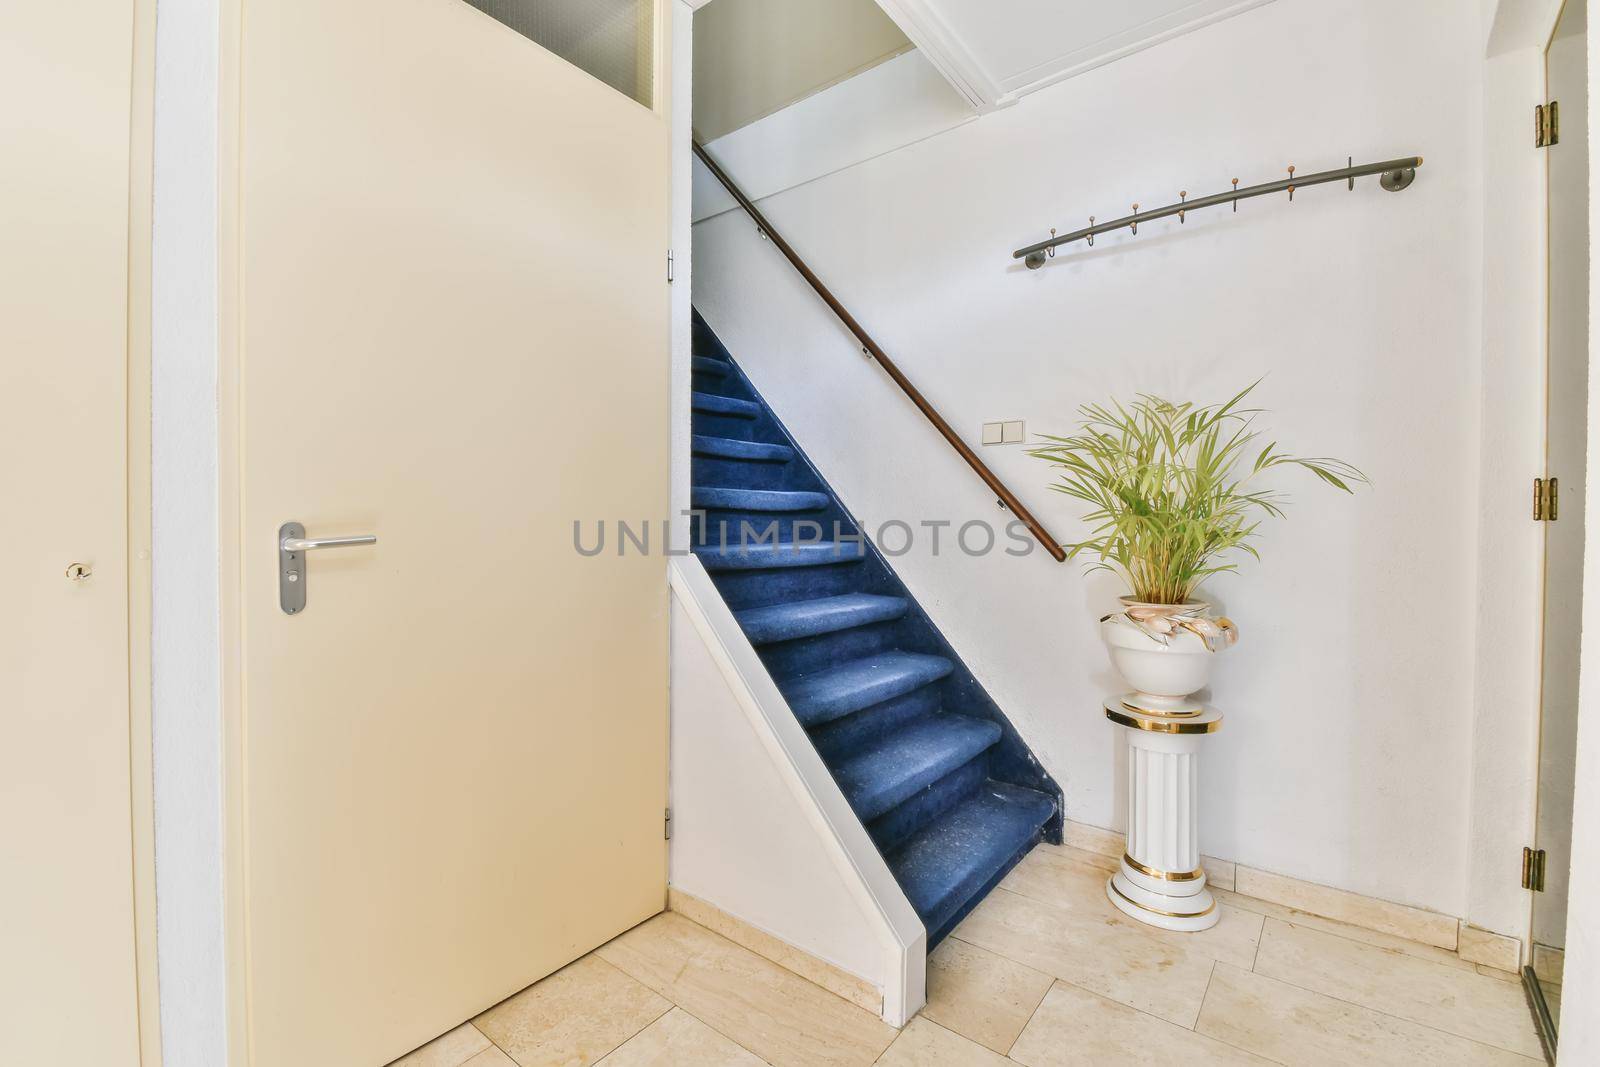 Attractive cozy unusual staircase with blue floor